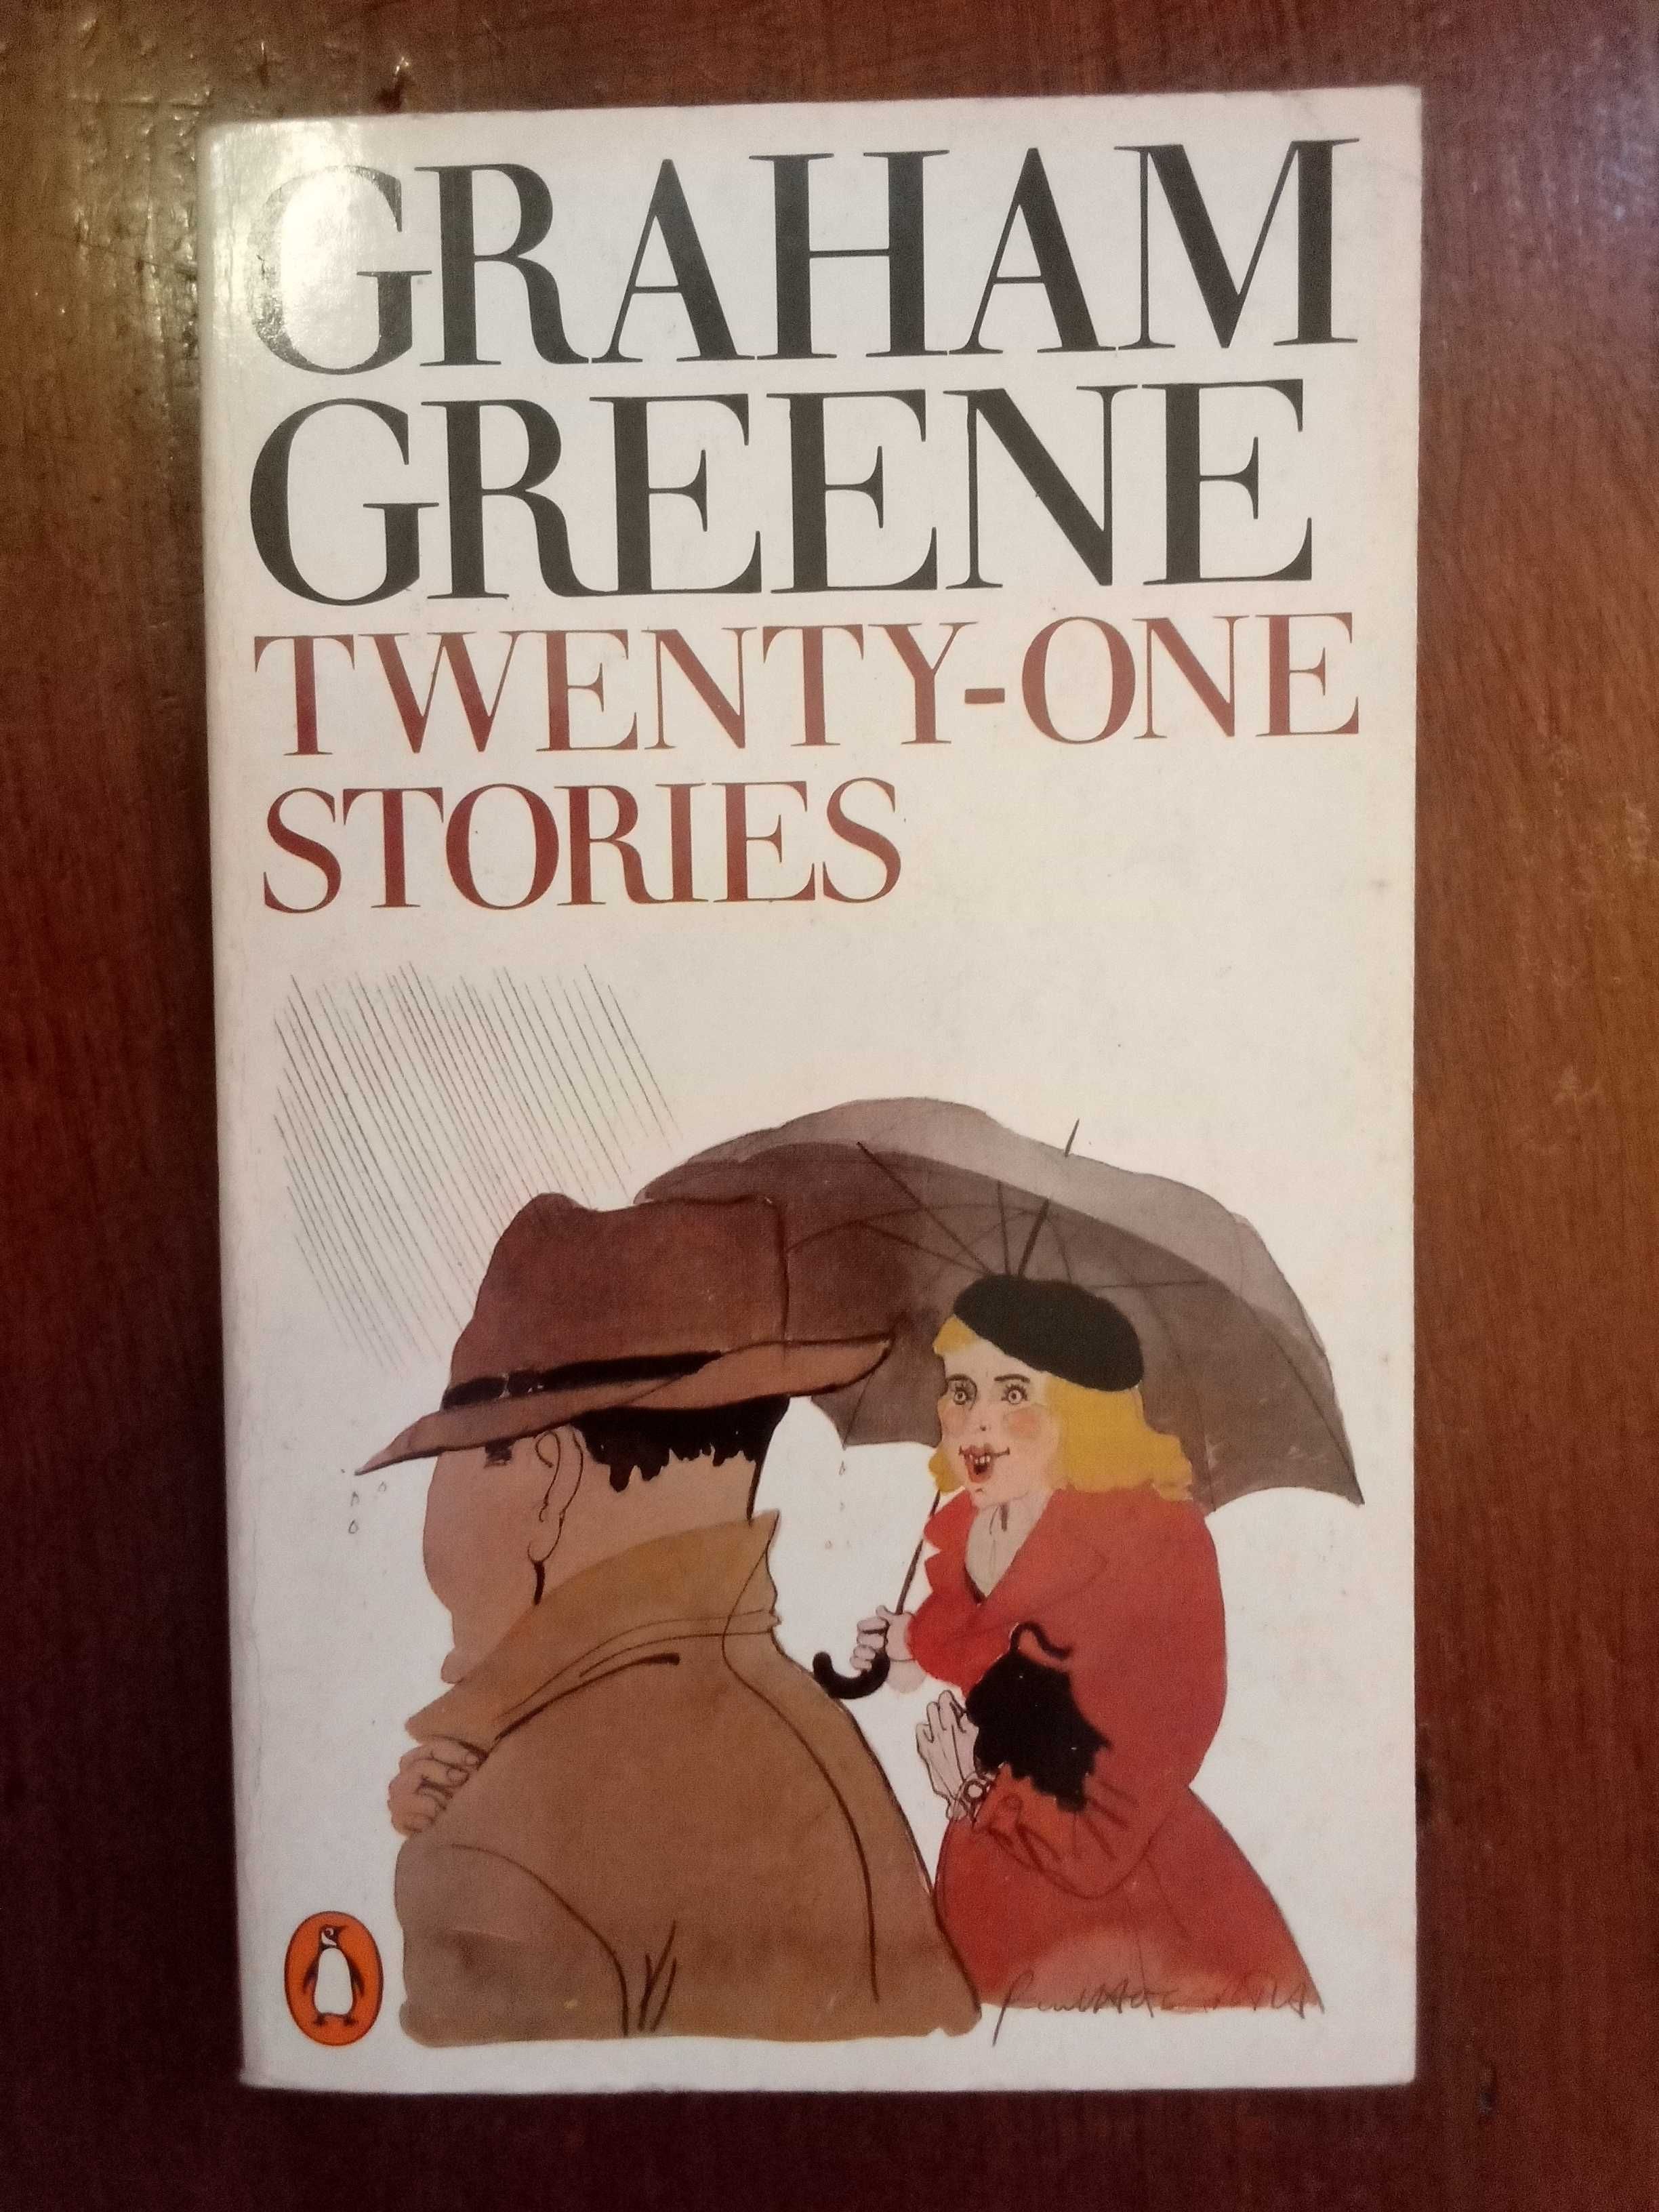 Graham Greene - Twenty-one stories